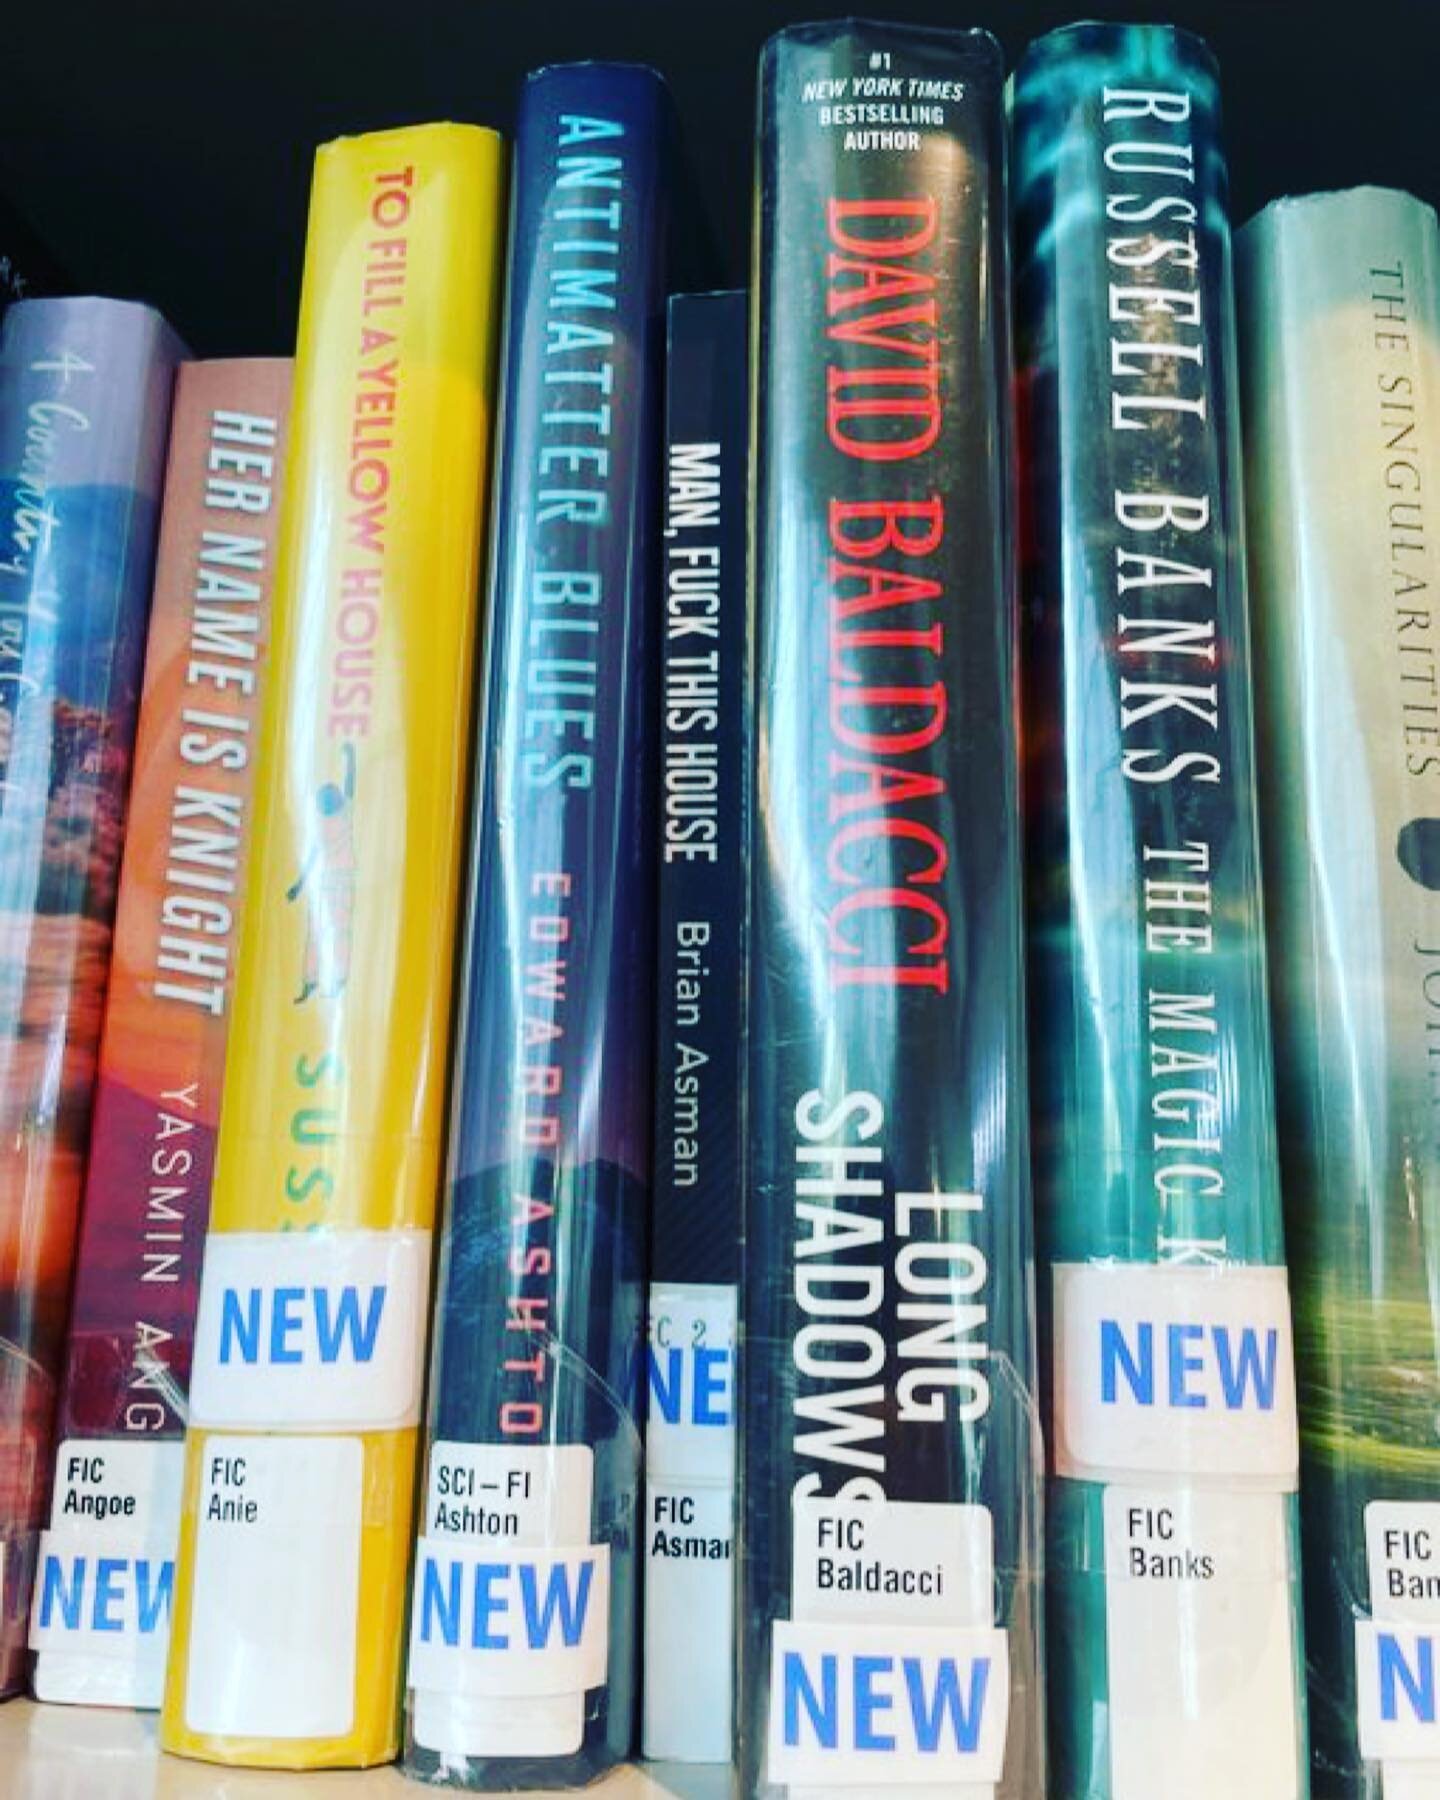 MFTH in the library in Queens, photo courtesy of @nickkolakowski #horror #horrorbooks #horrorbookstagram #bookshelf #bookporn #library #book #books #bookstagram